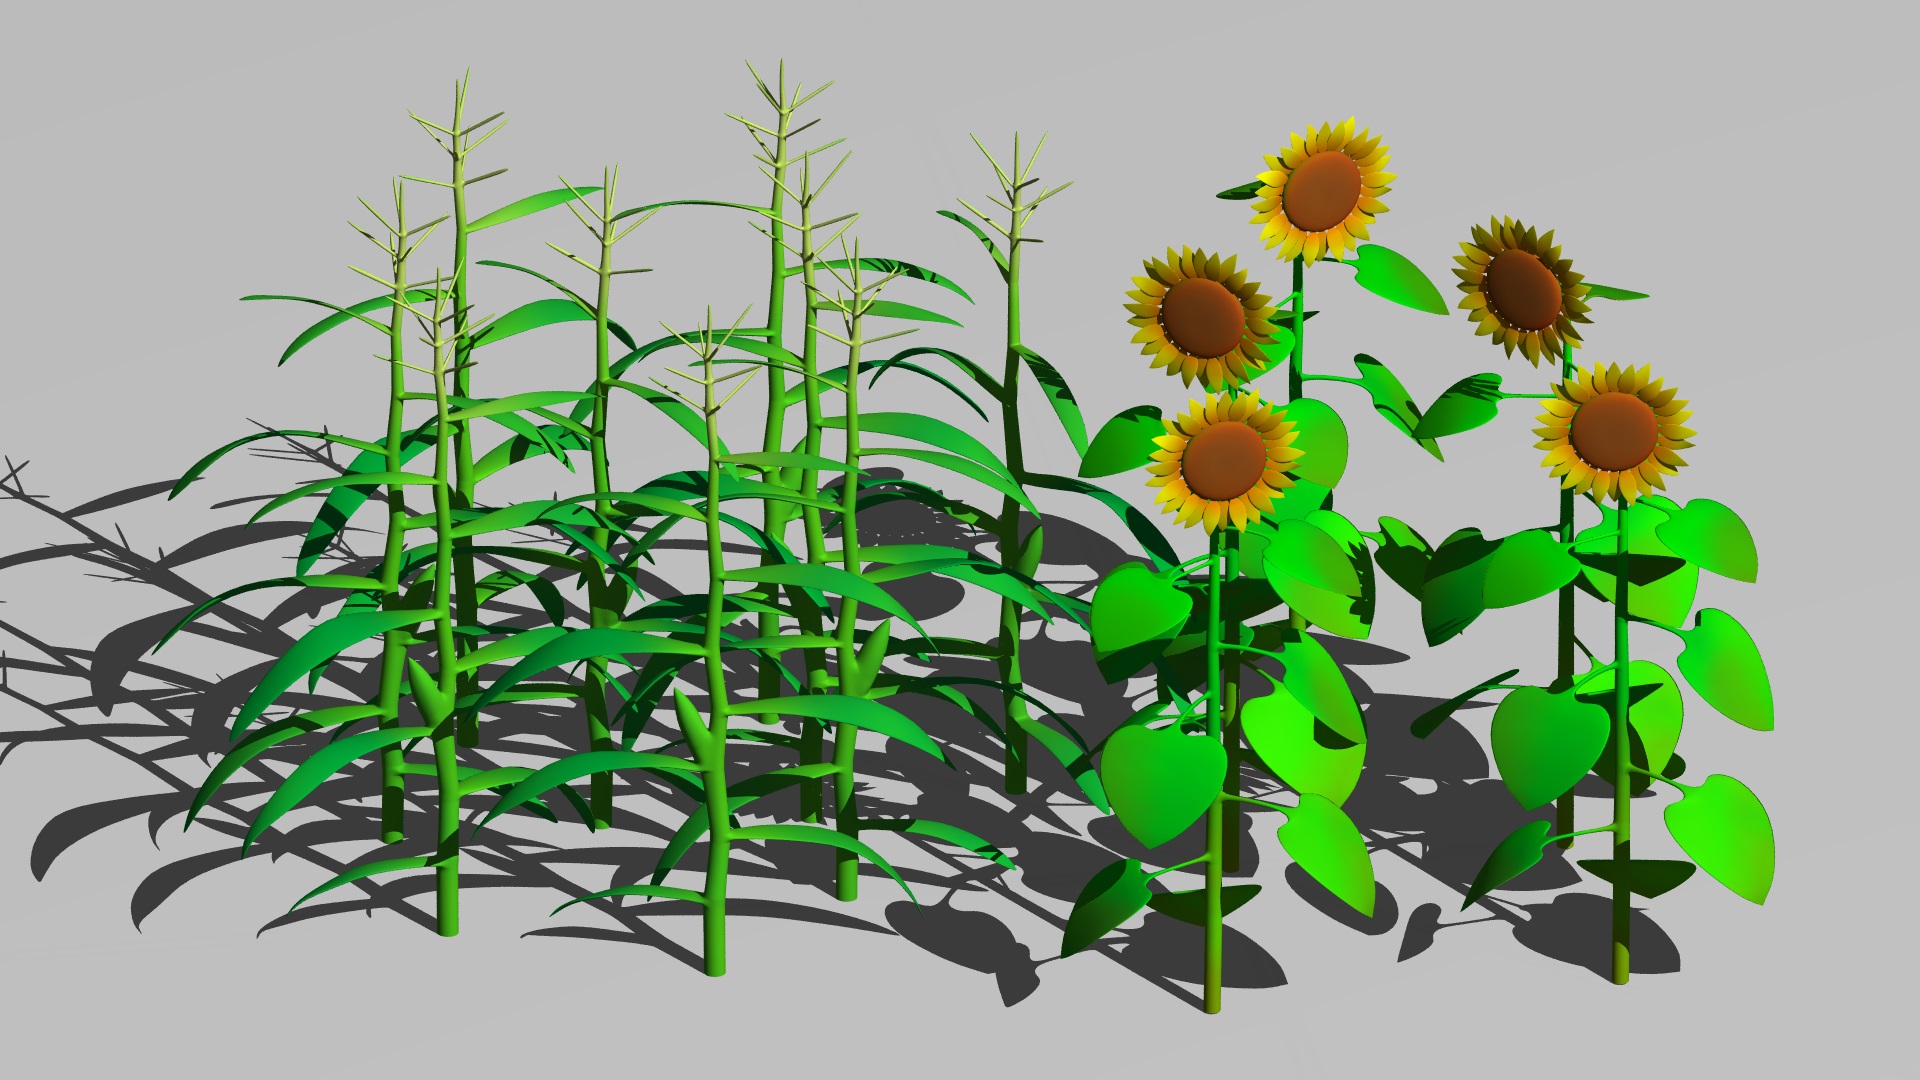 Sweetcorn and Sunflowers 